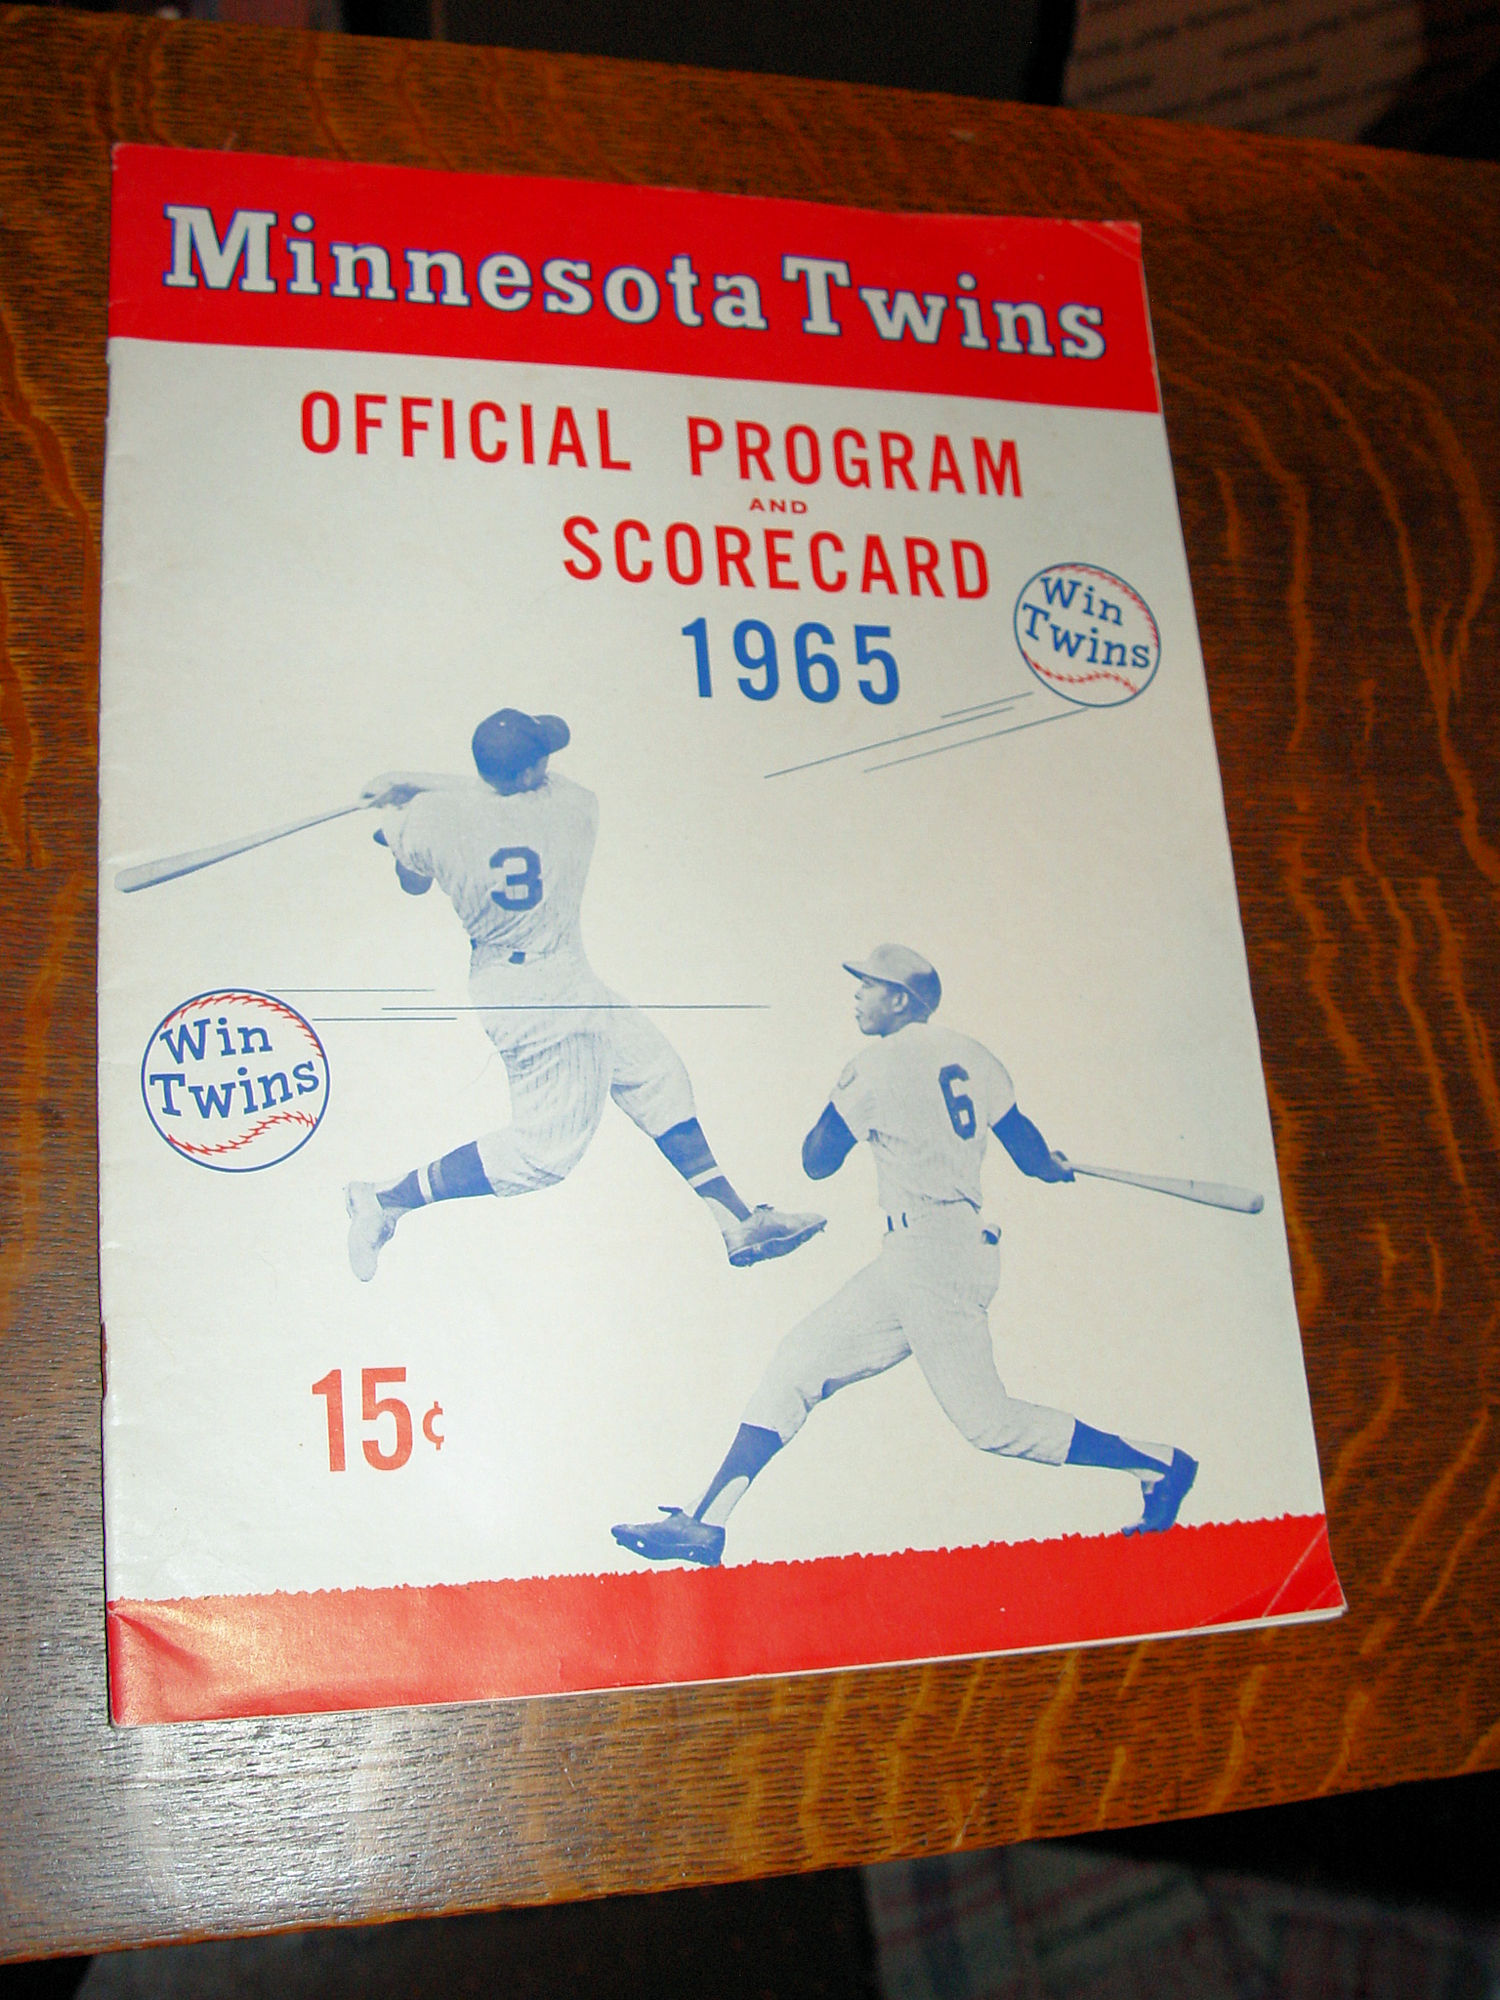 1965 Baseball
                        program Minnesota Twins vs. Cleveland Indians
                        (Twins win Pennant 1965)